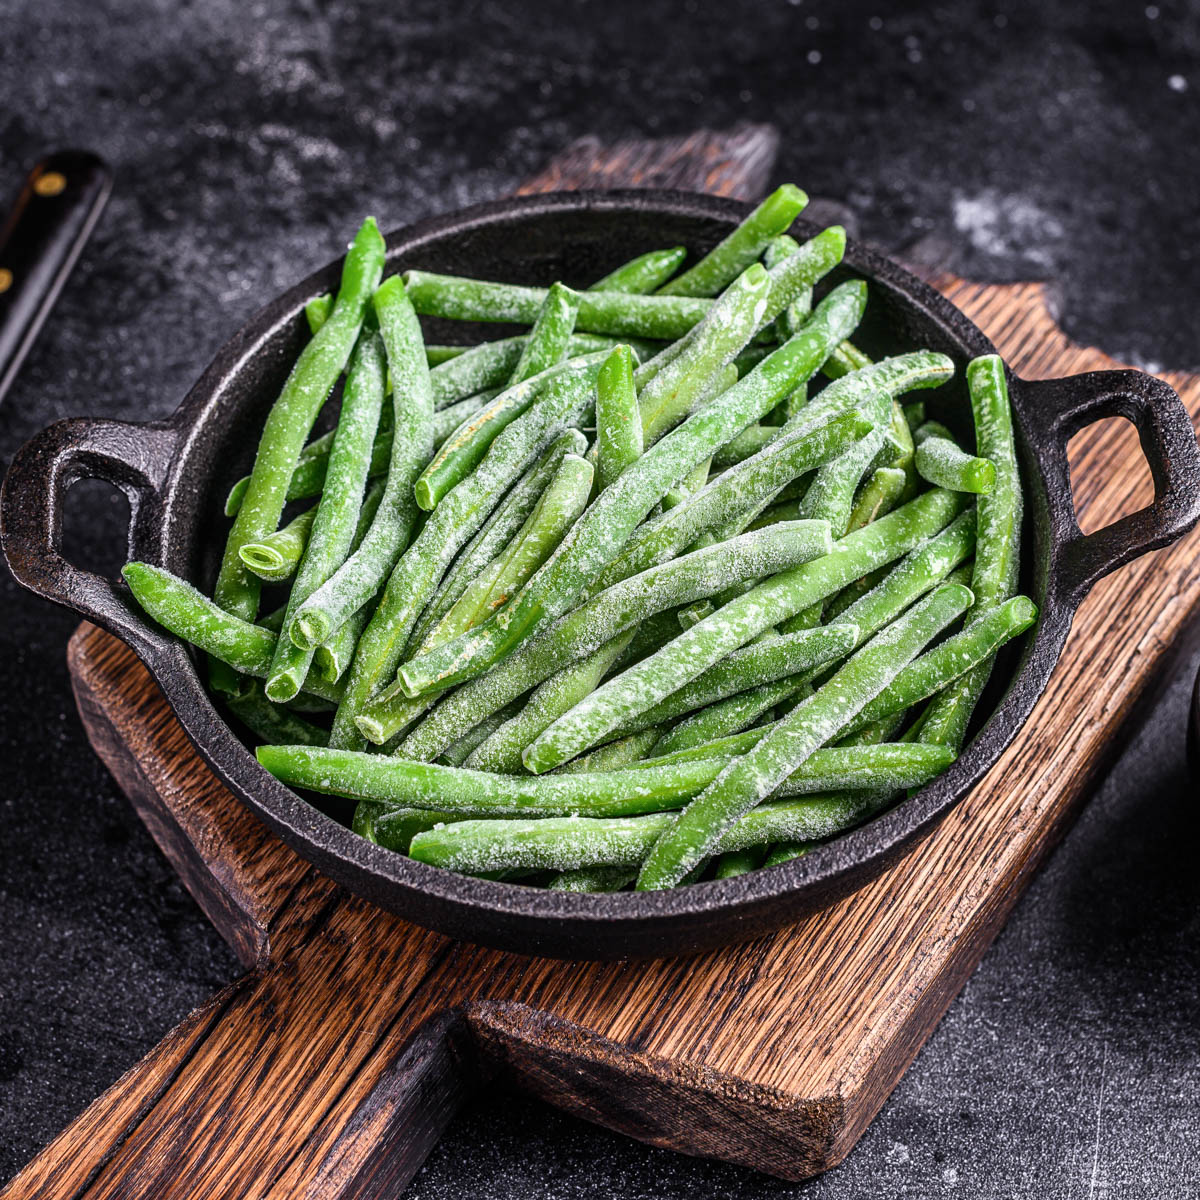 Frozen green beans in a cast iron skillet